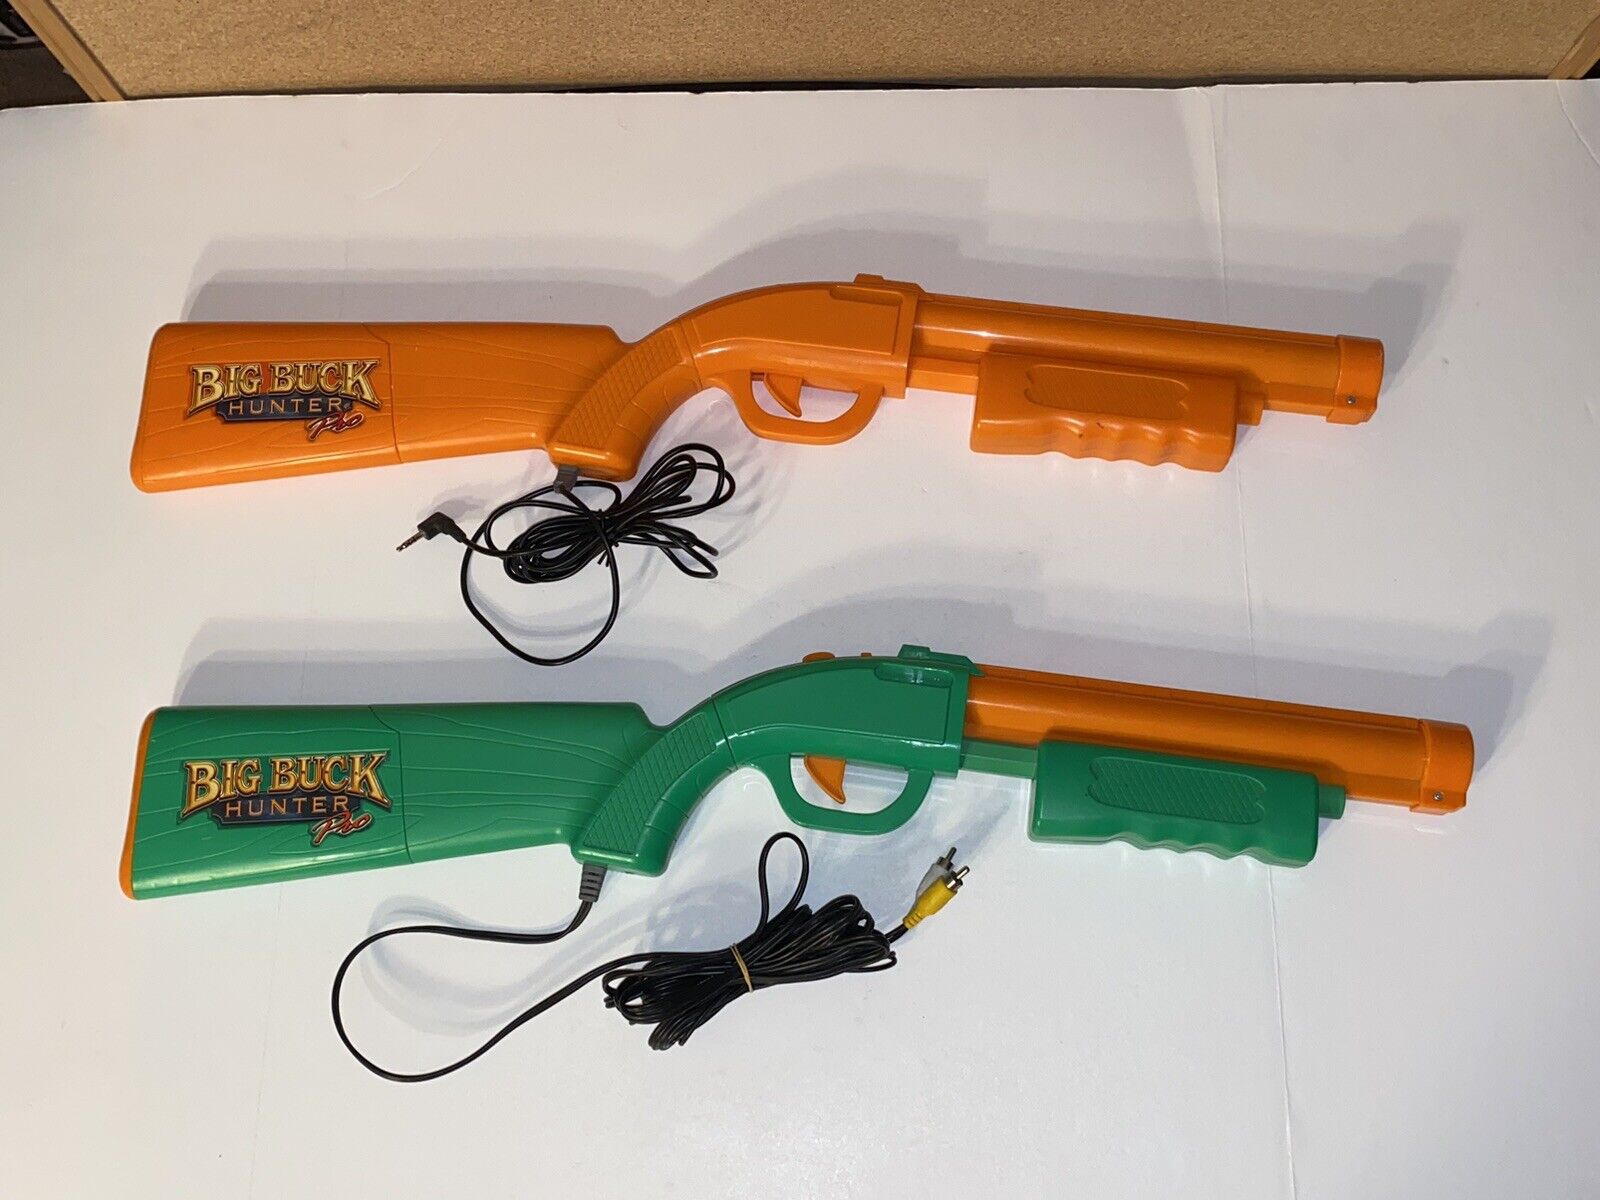 Big Buck Hunter Pro Plug N Play TV Video Game Green & Orange Guns - Tested Work